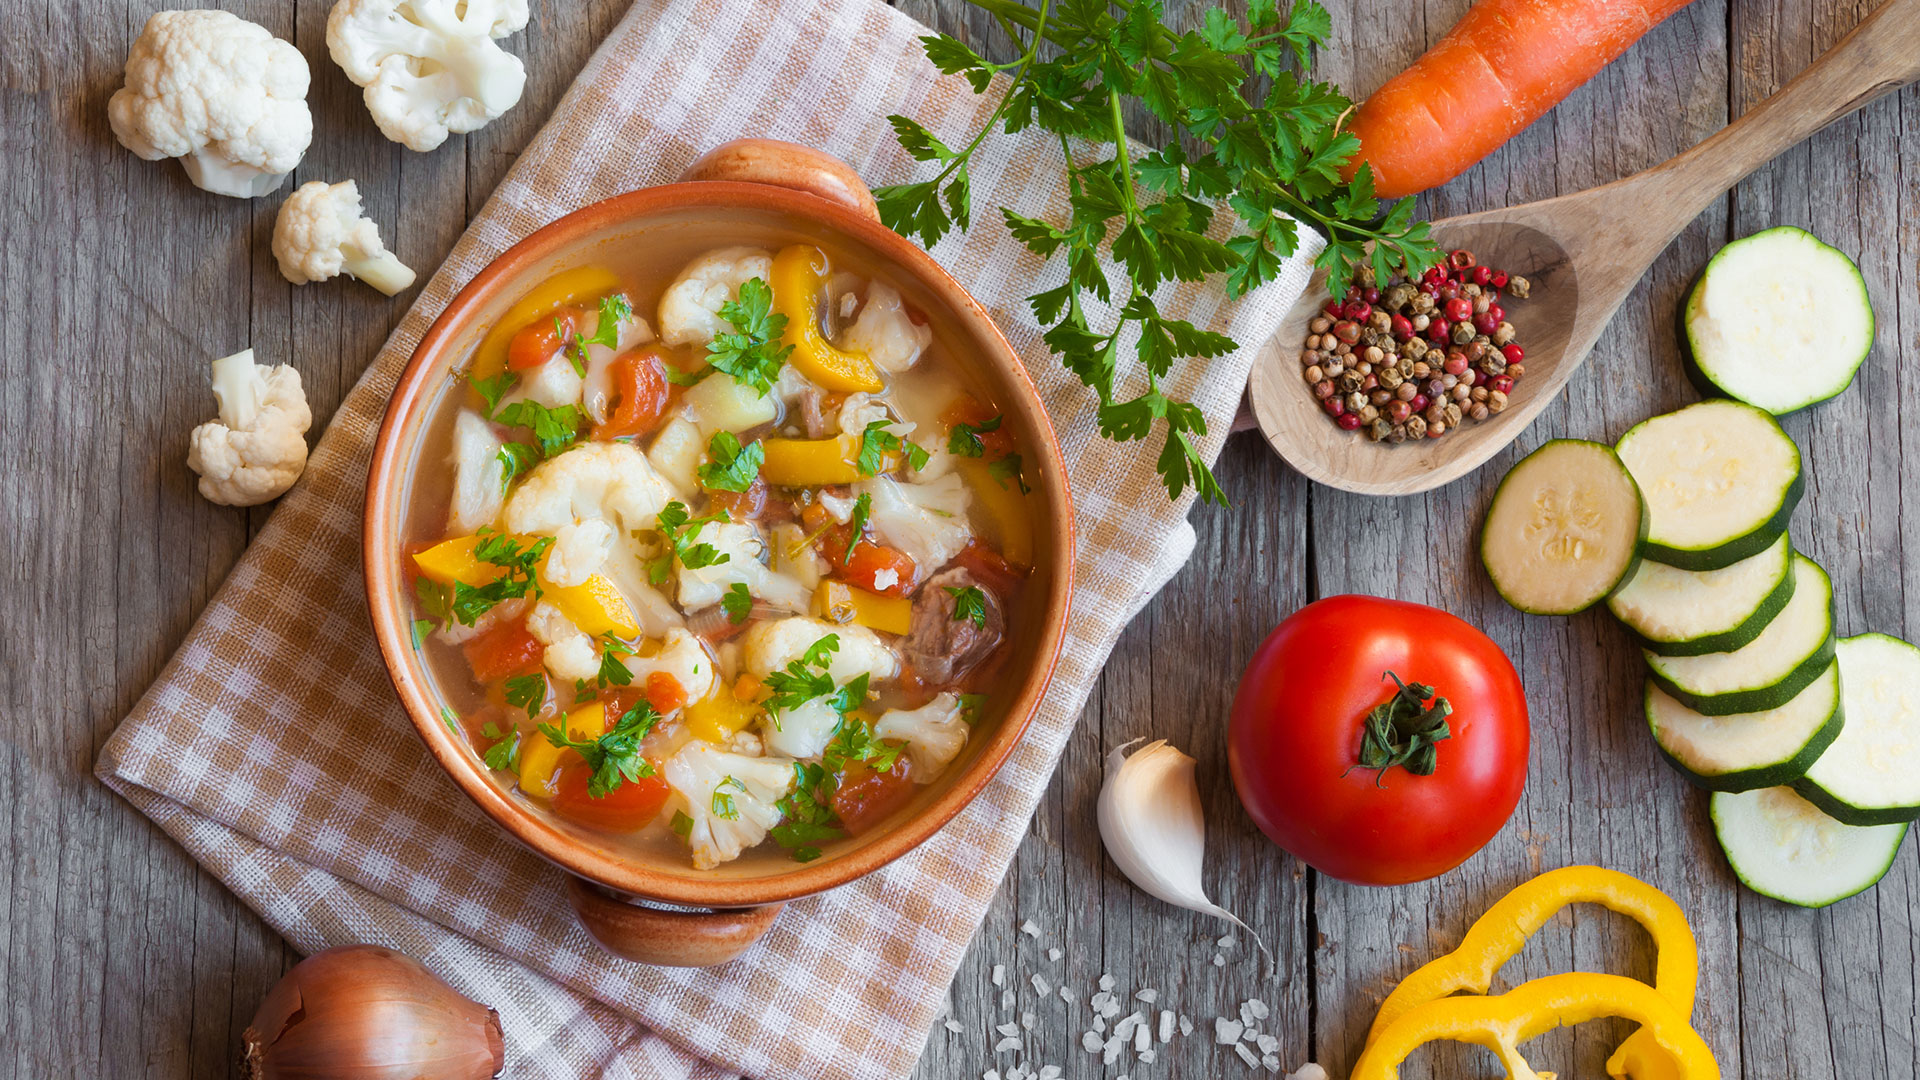 Dieta da sopa milagrosa funciona de verdade?